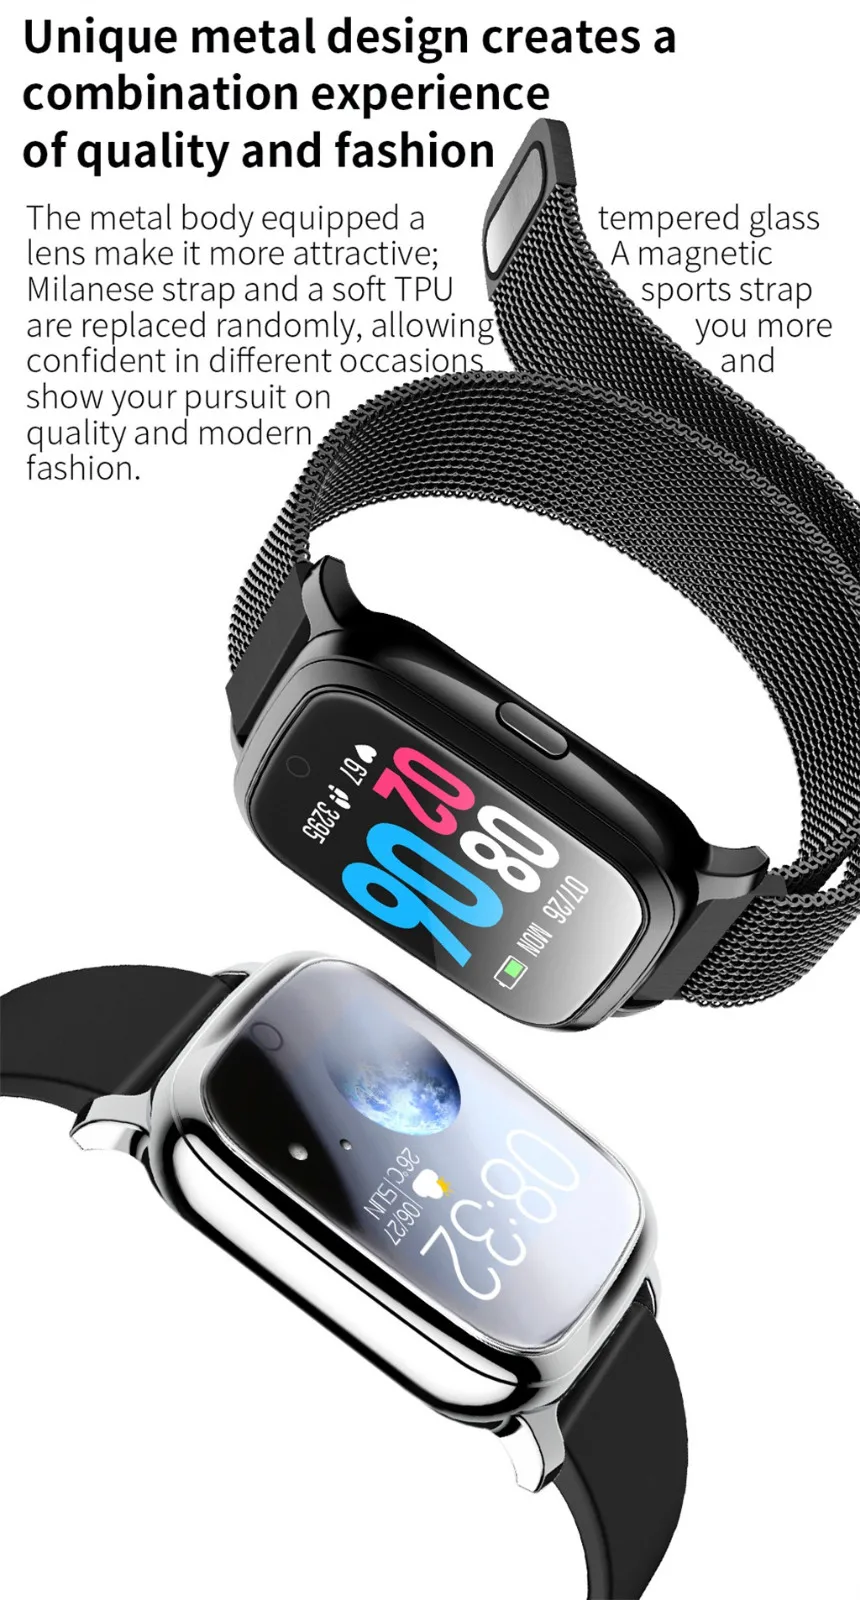 HIPERDEAL новые женские Смарт часы CV06 пульсометр кровяное давление мониторинг сна SmartWatch Шагомер трекер Jy4